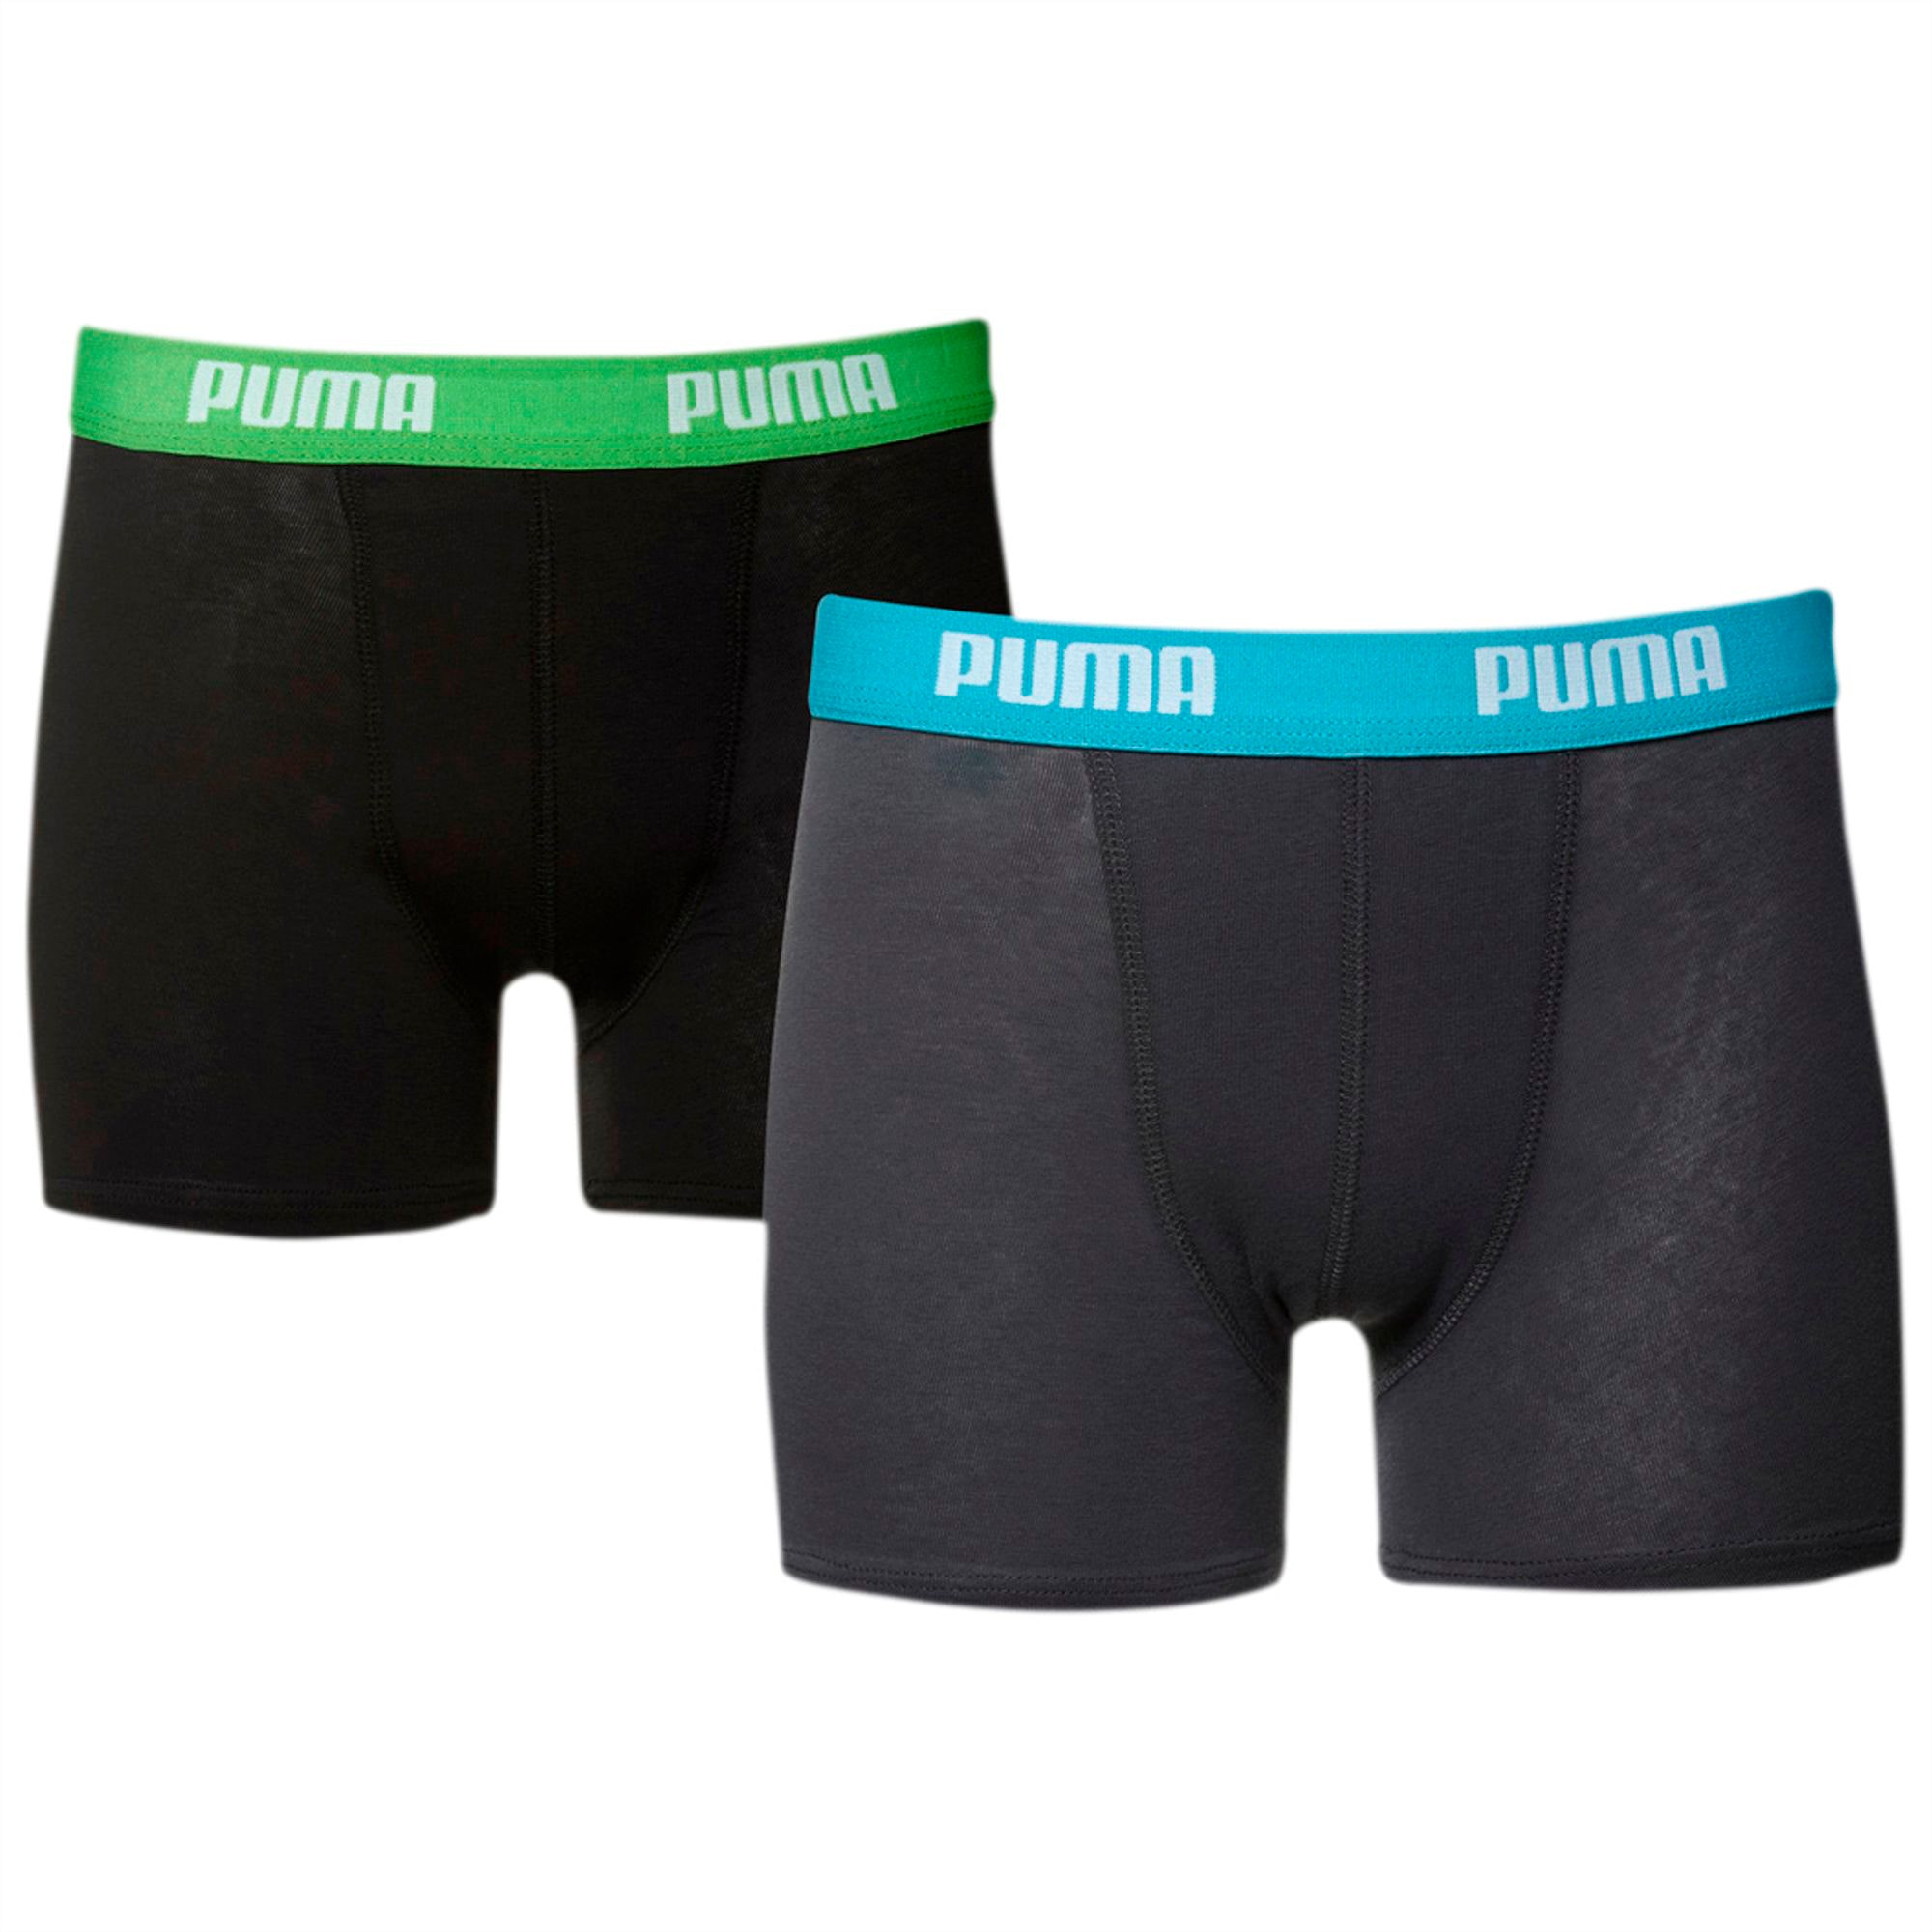 puma swimwear india